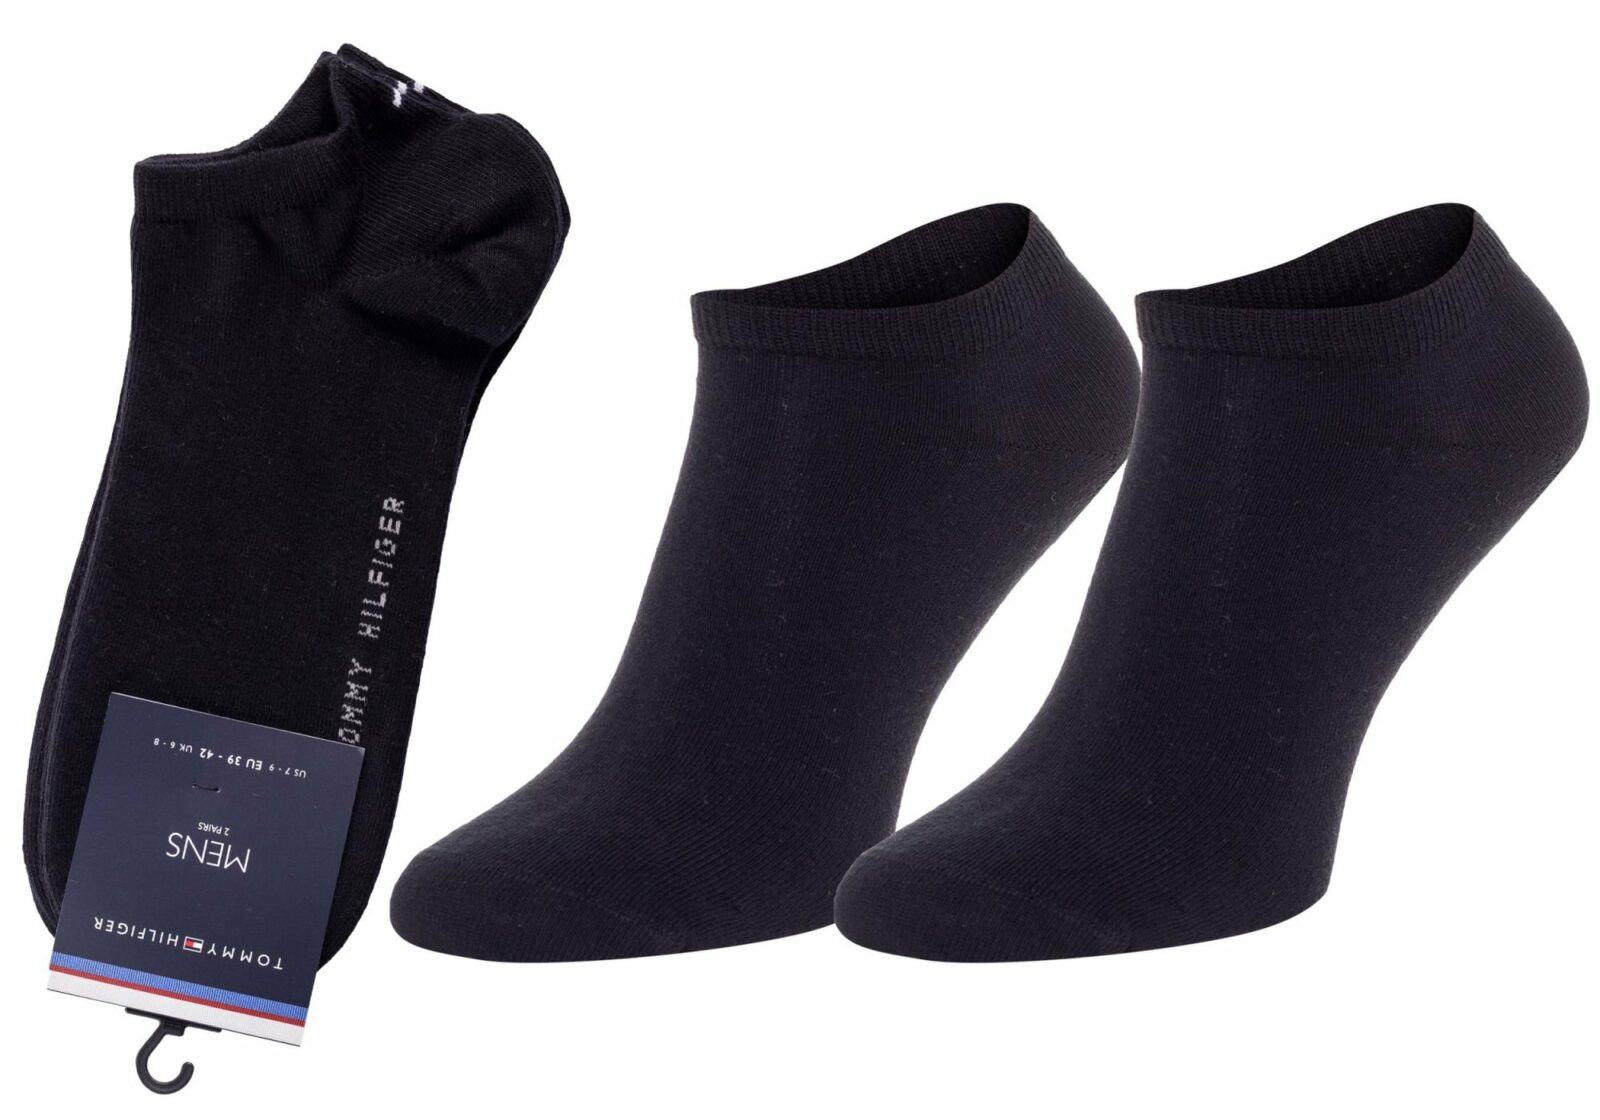 Sada dvou párů pánských nízkých ponožek v černé